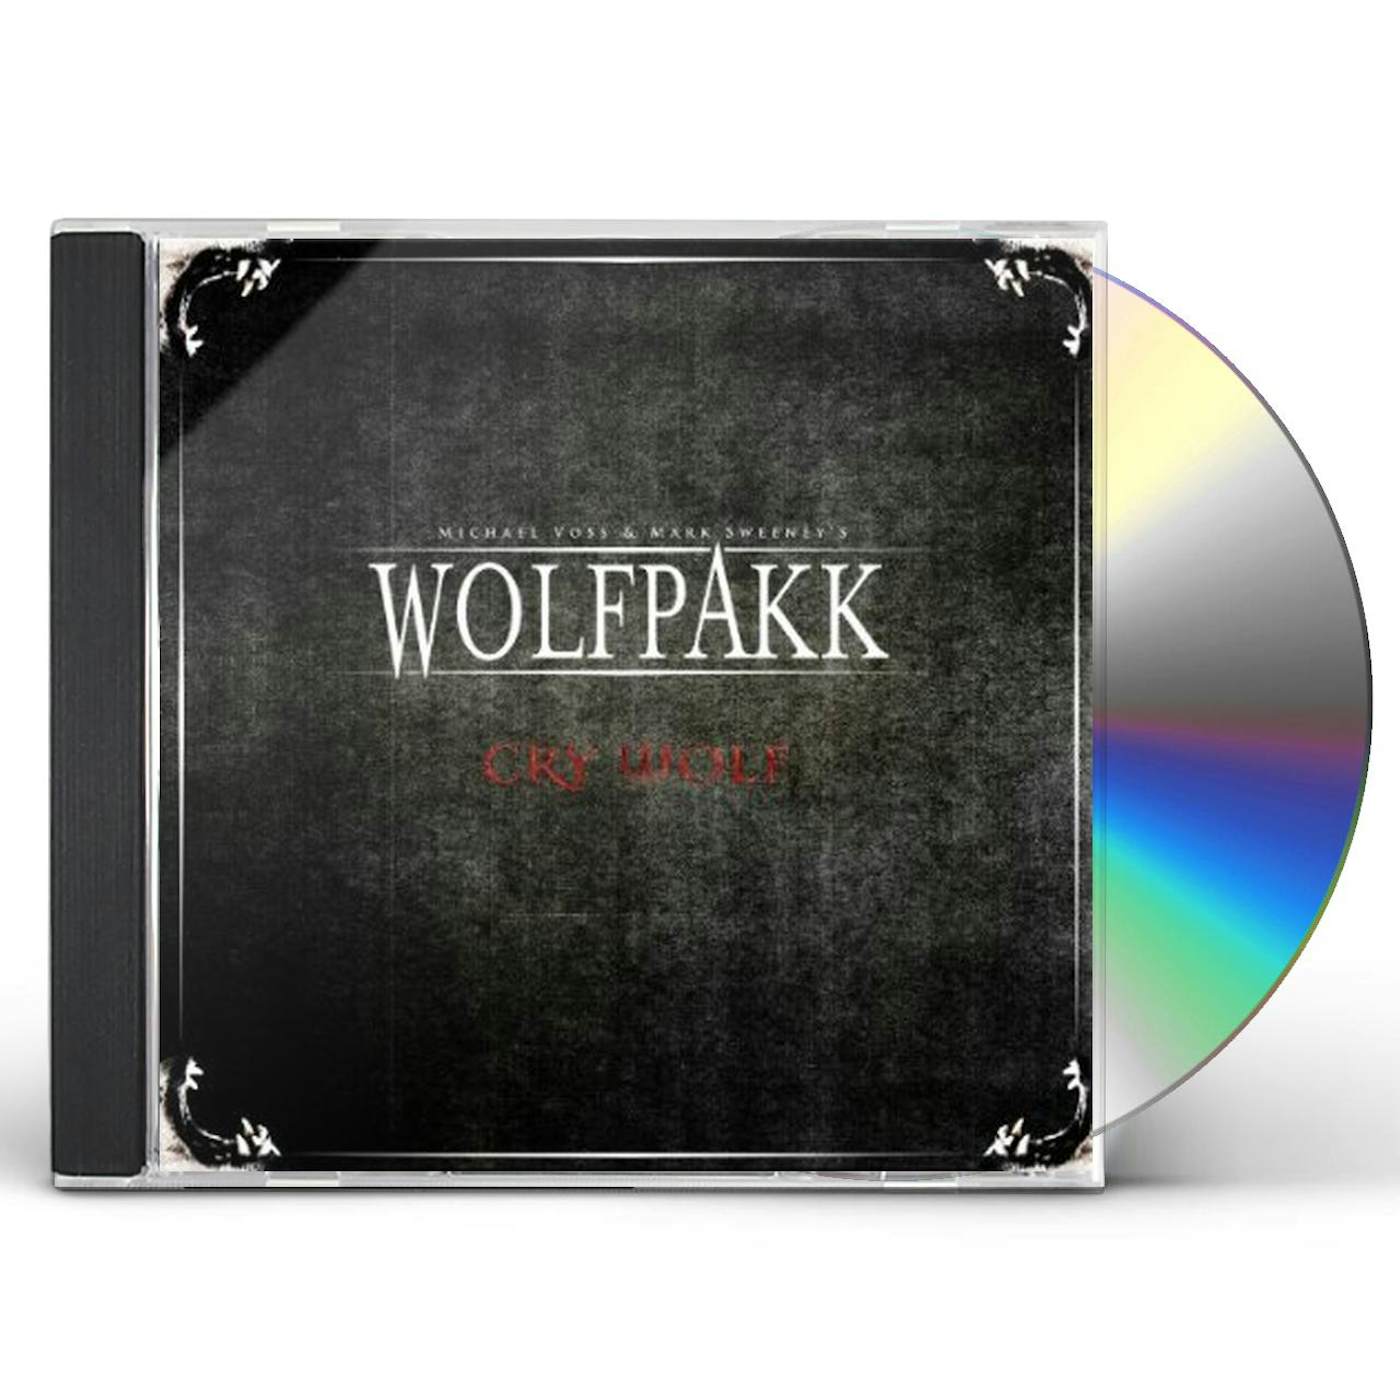 Wolfpakk CRY WOLF CD